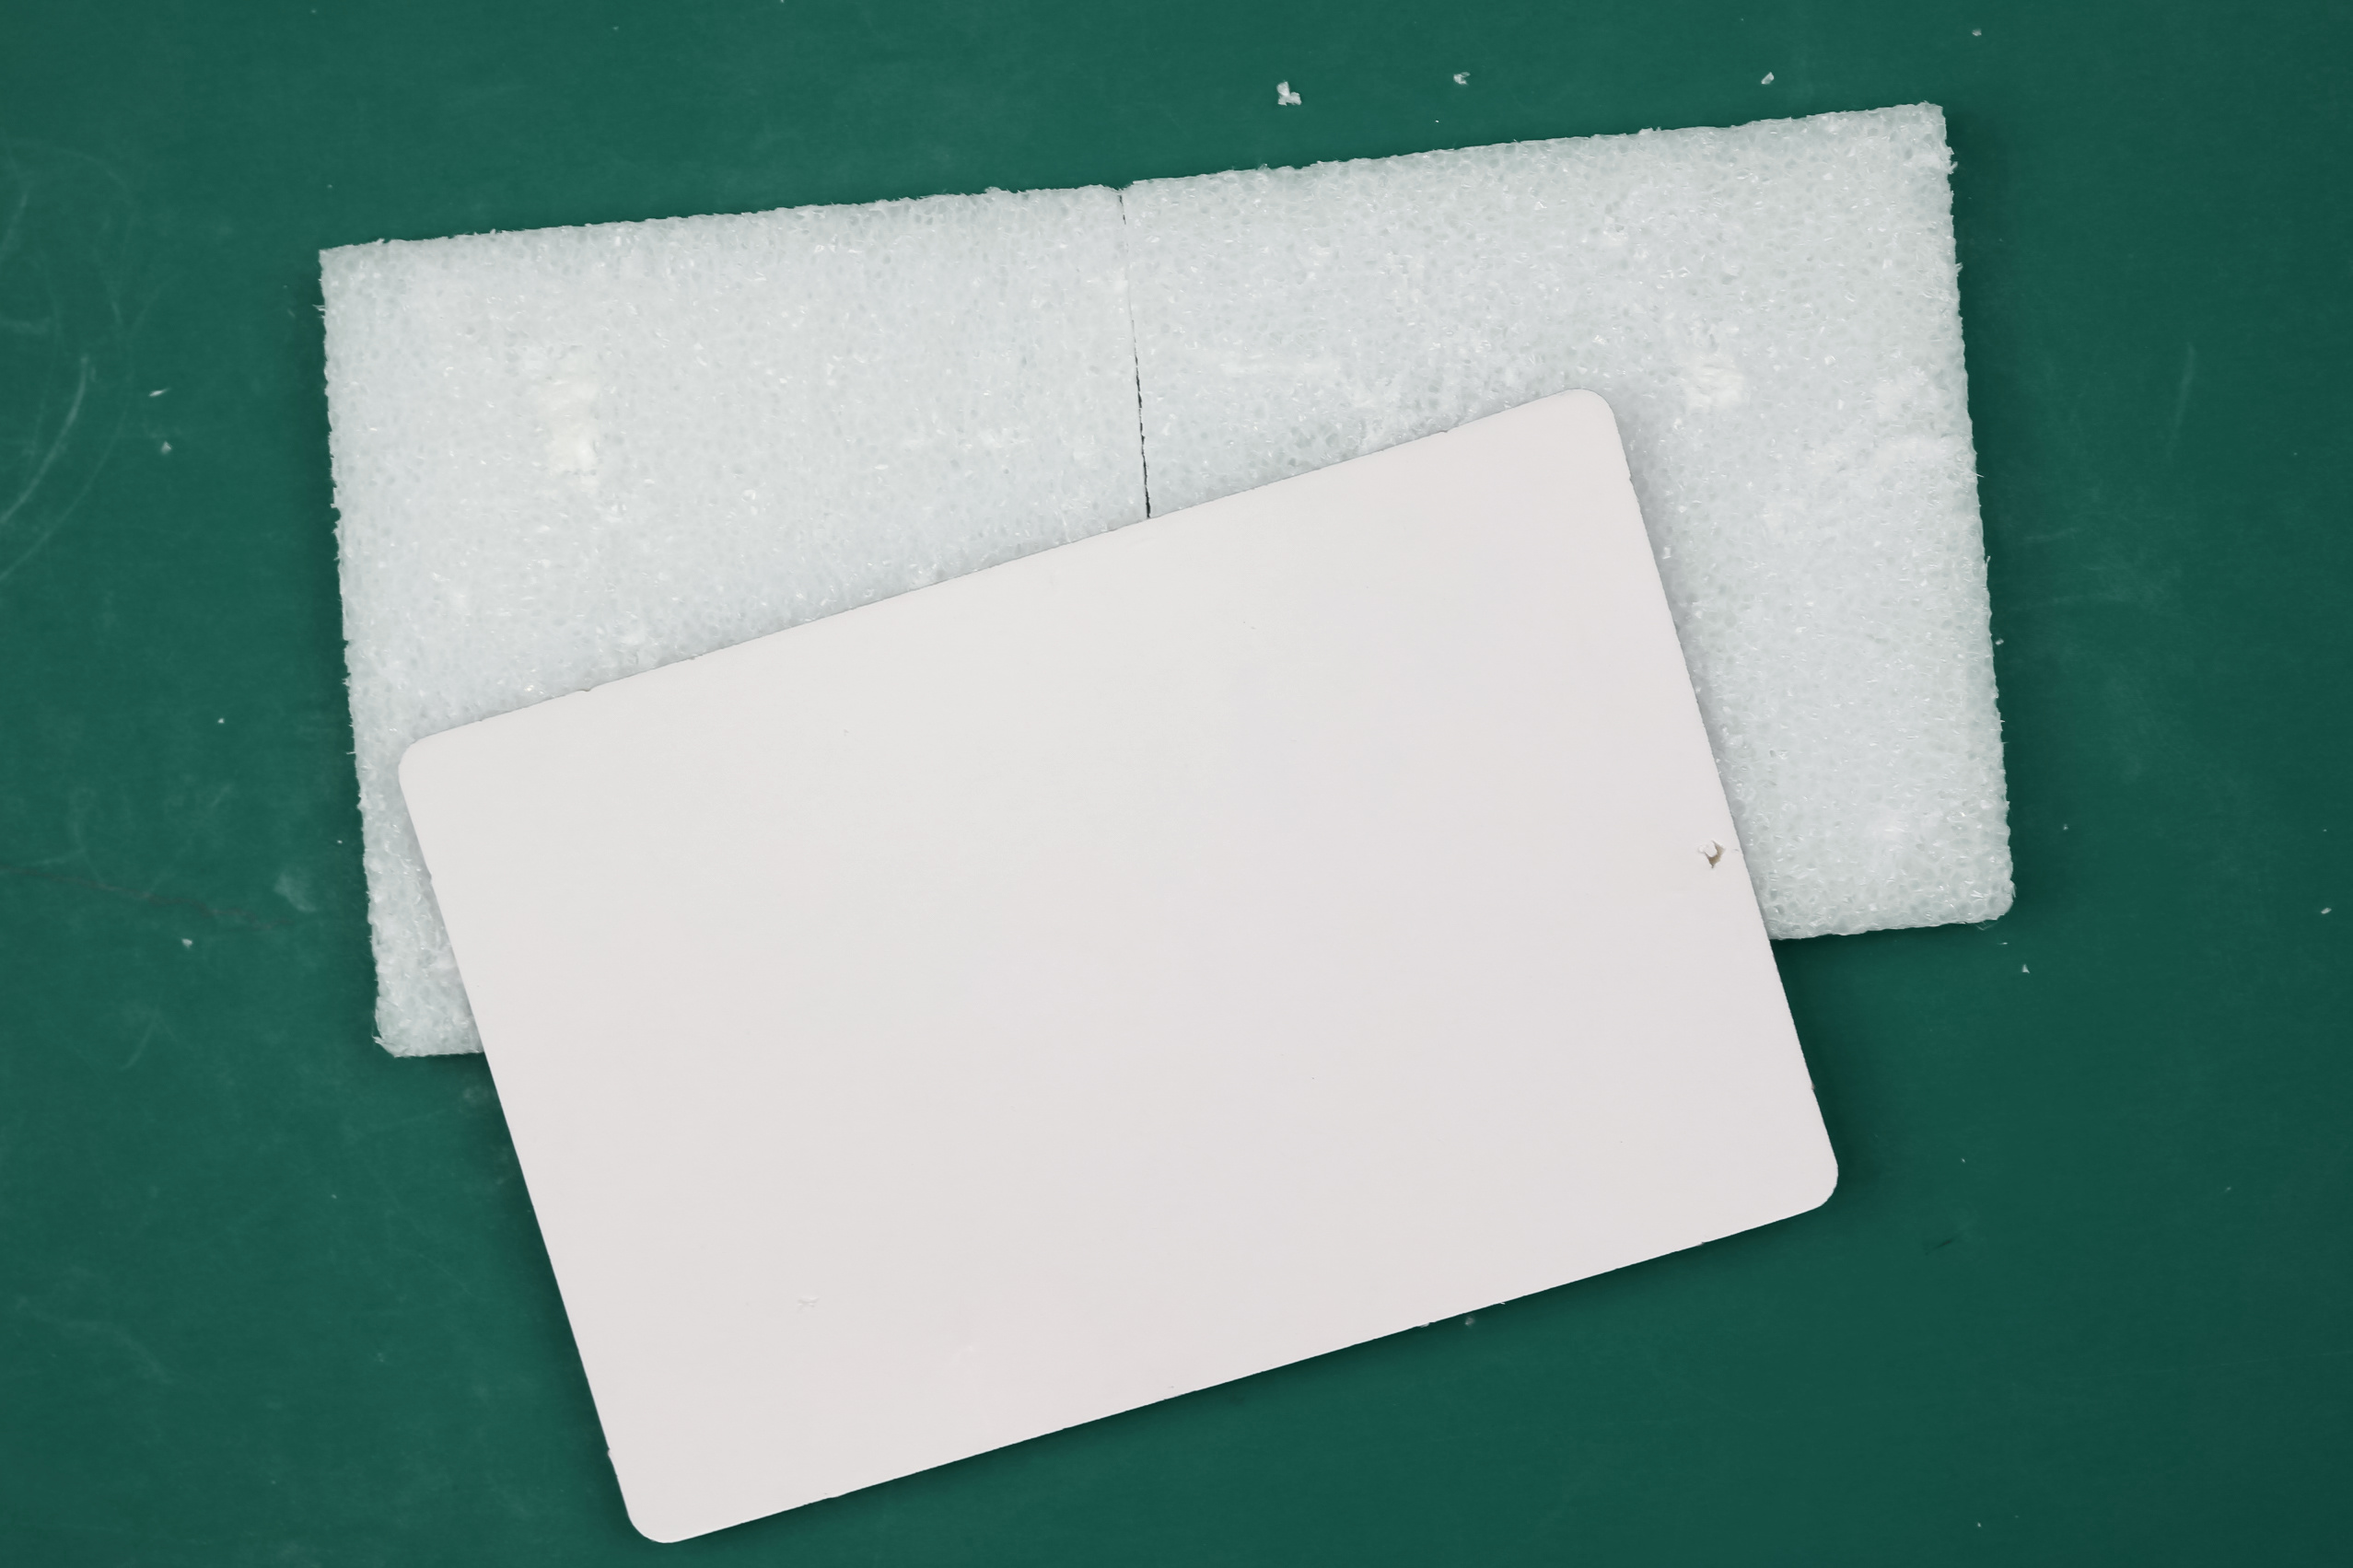 White styrofoam on a green background